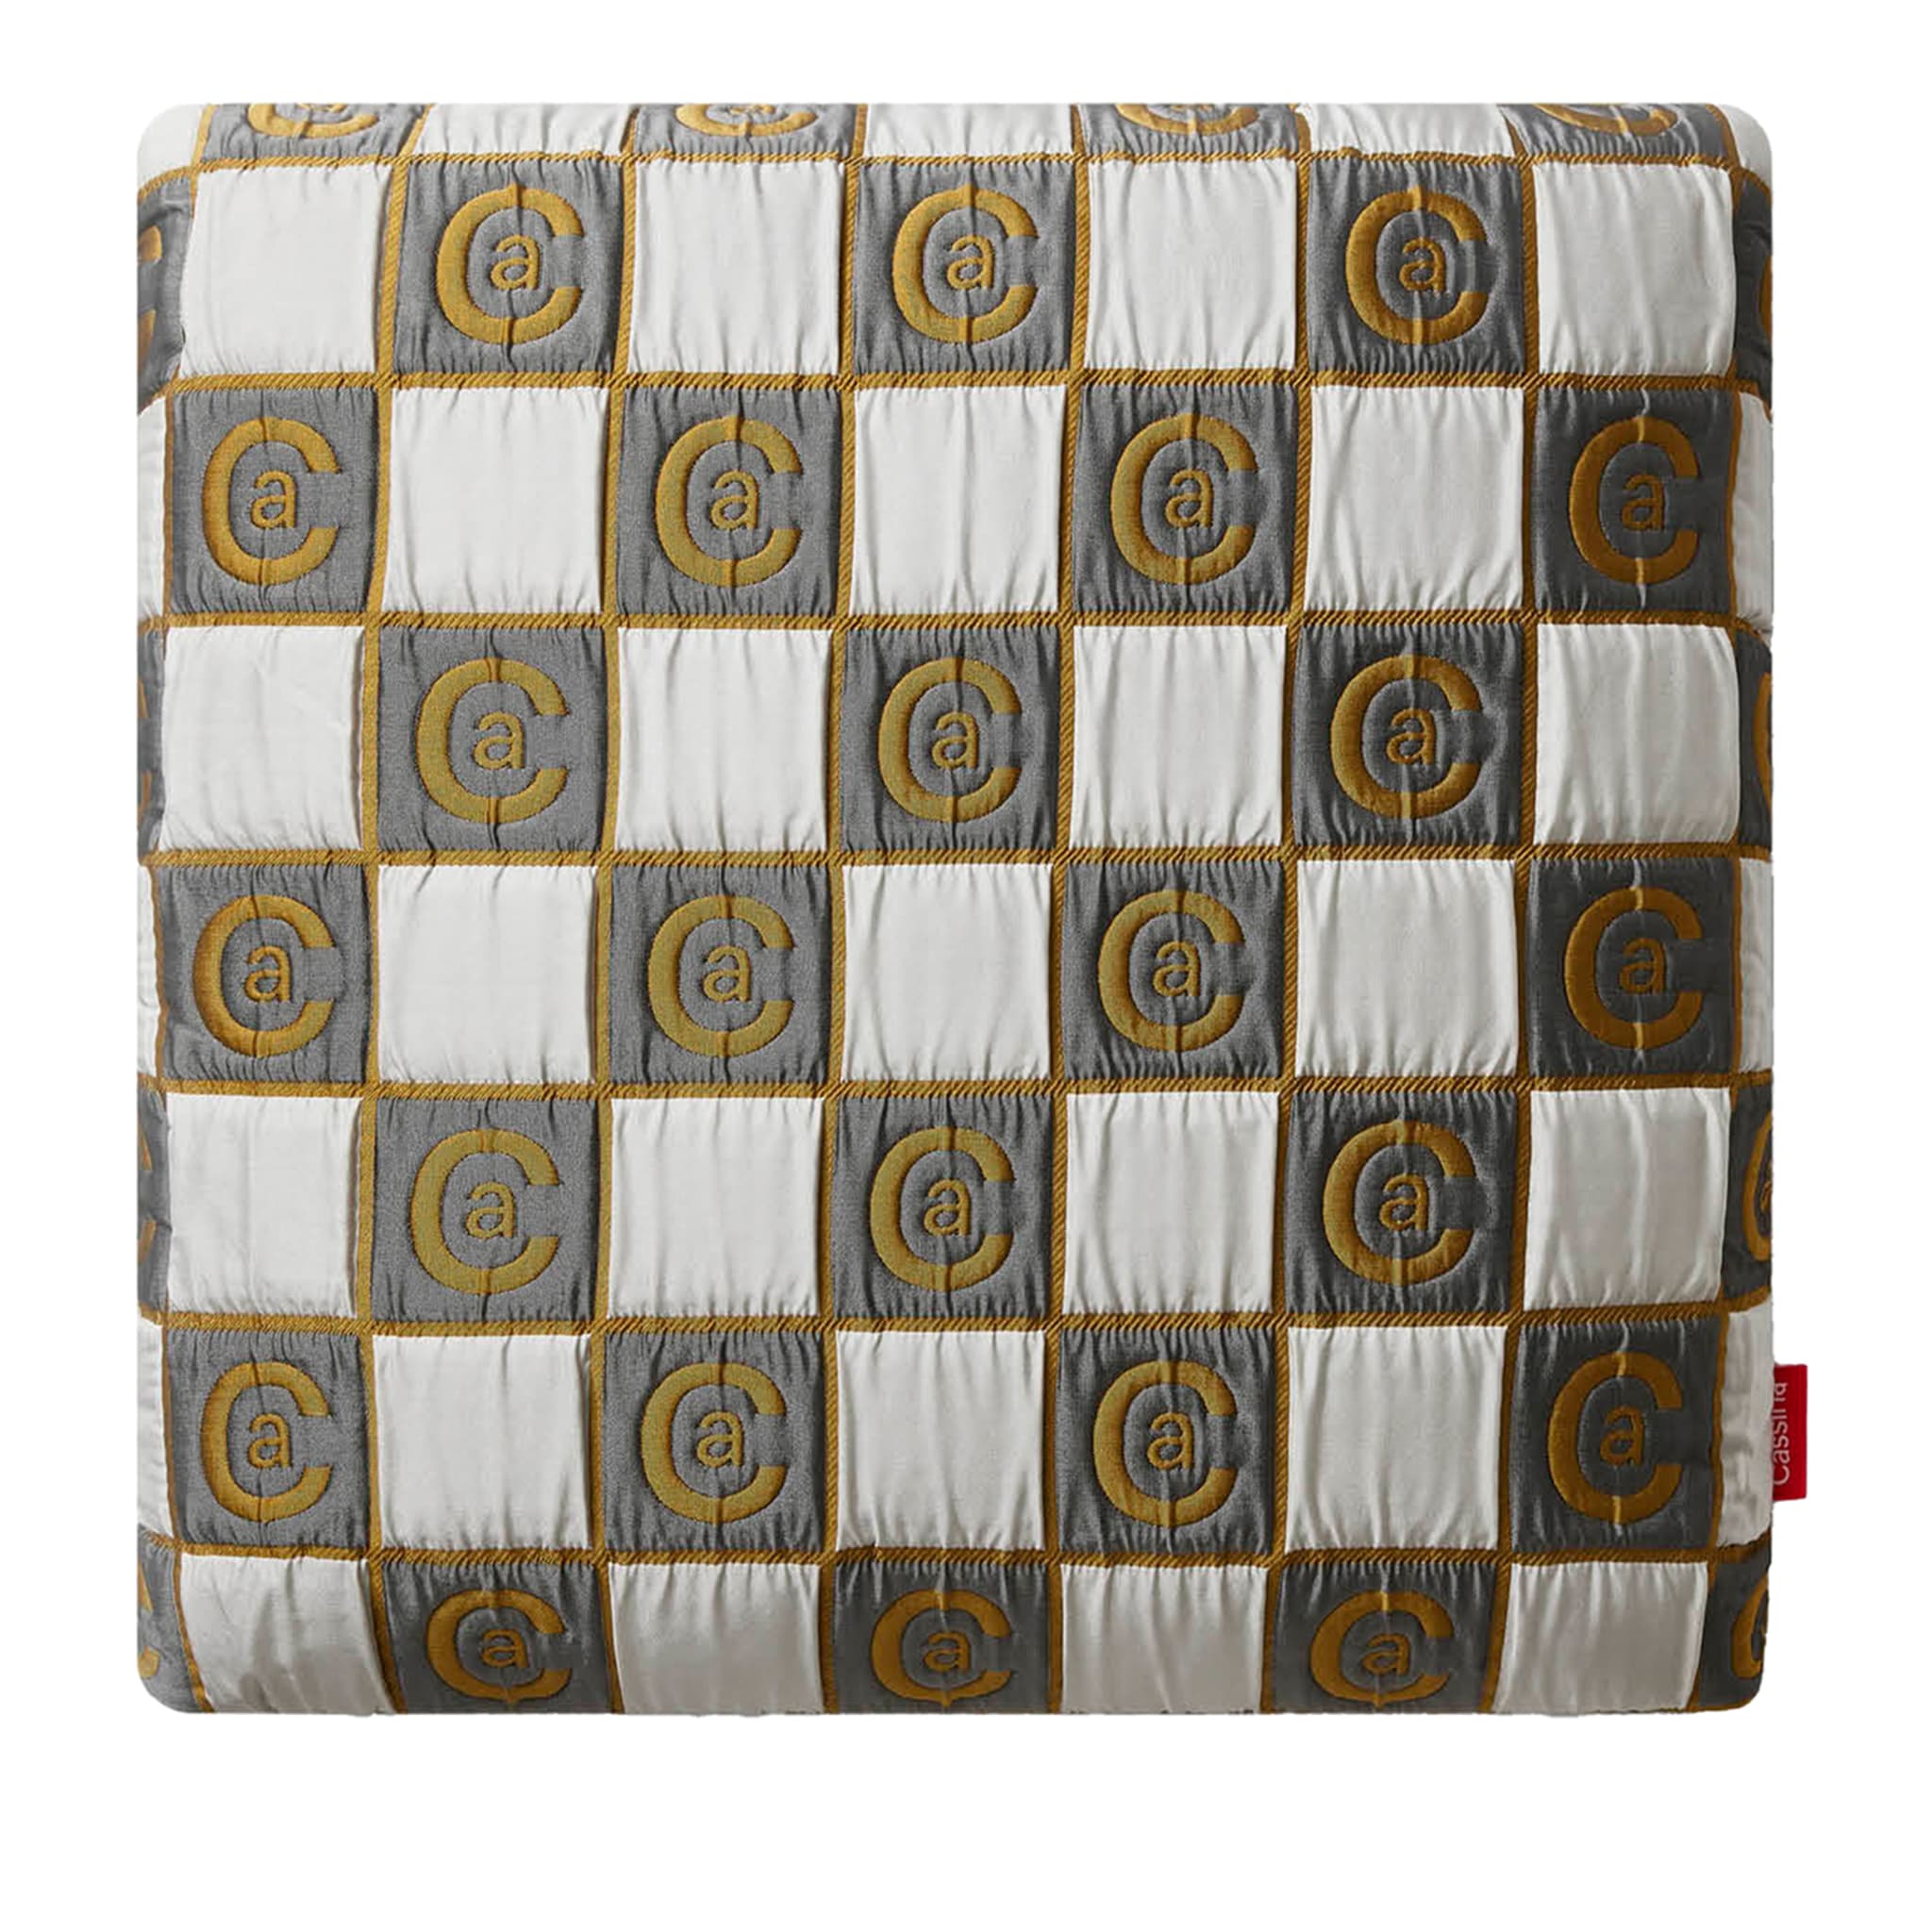 Chess Frame Decorative Cushions #1 - Main view